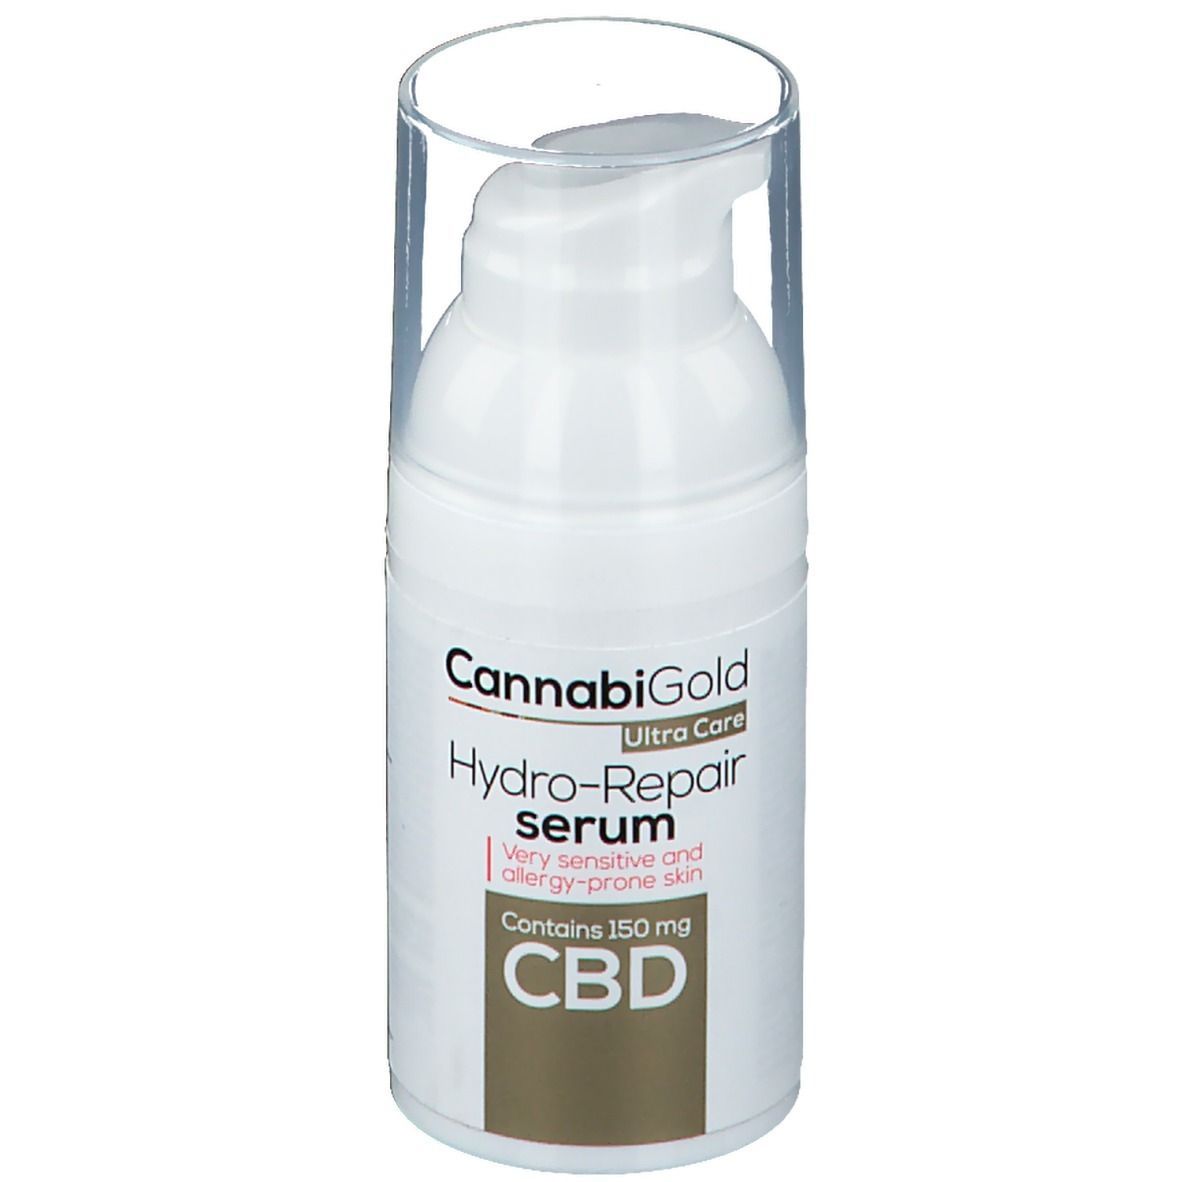 CannabiGold Ultra Care Hydro-Repair Serum